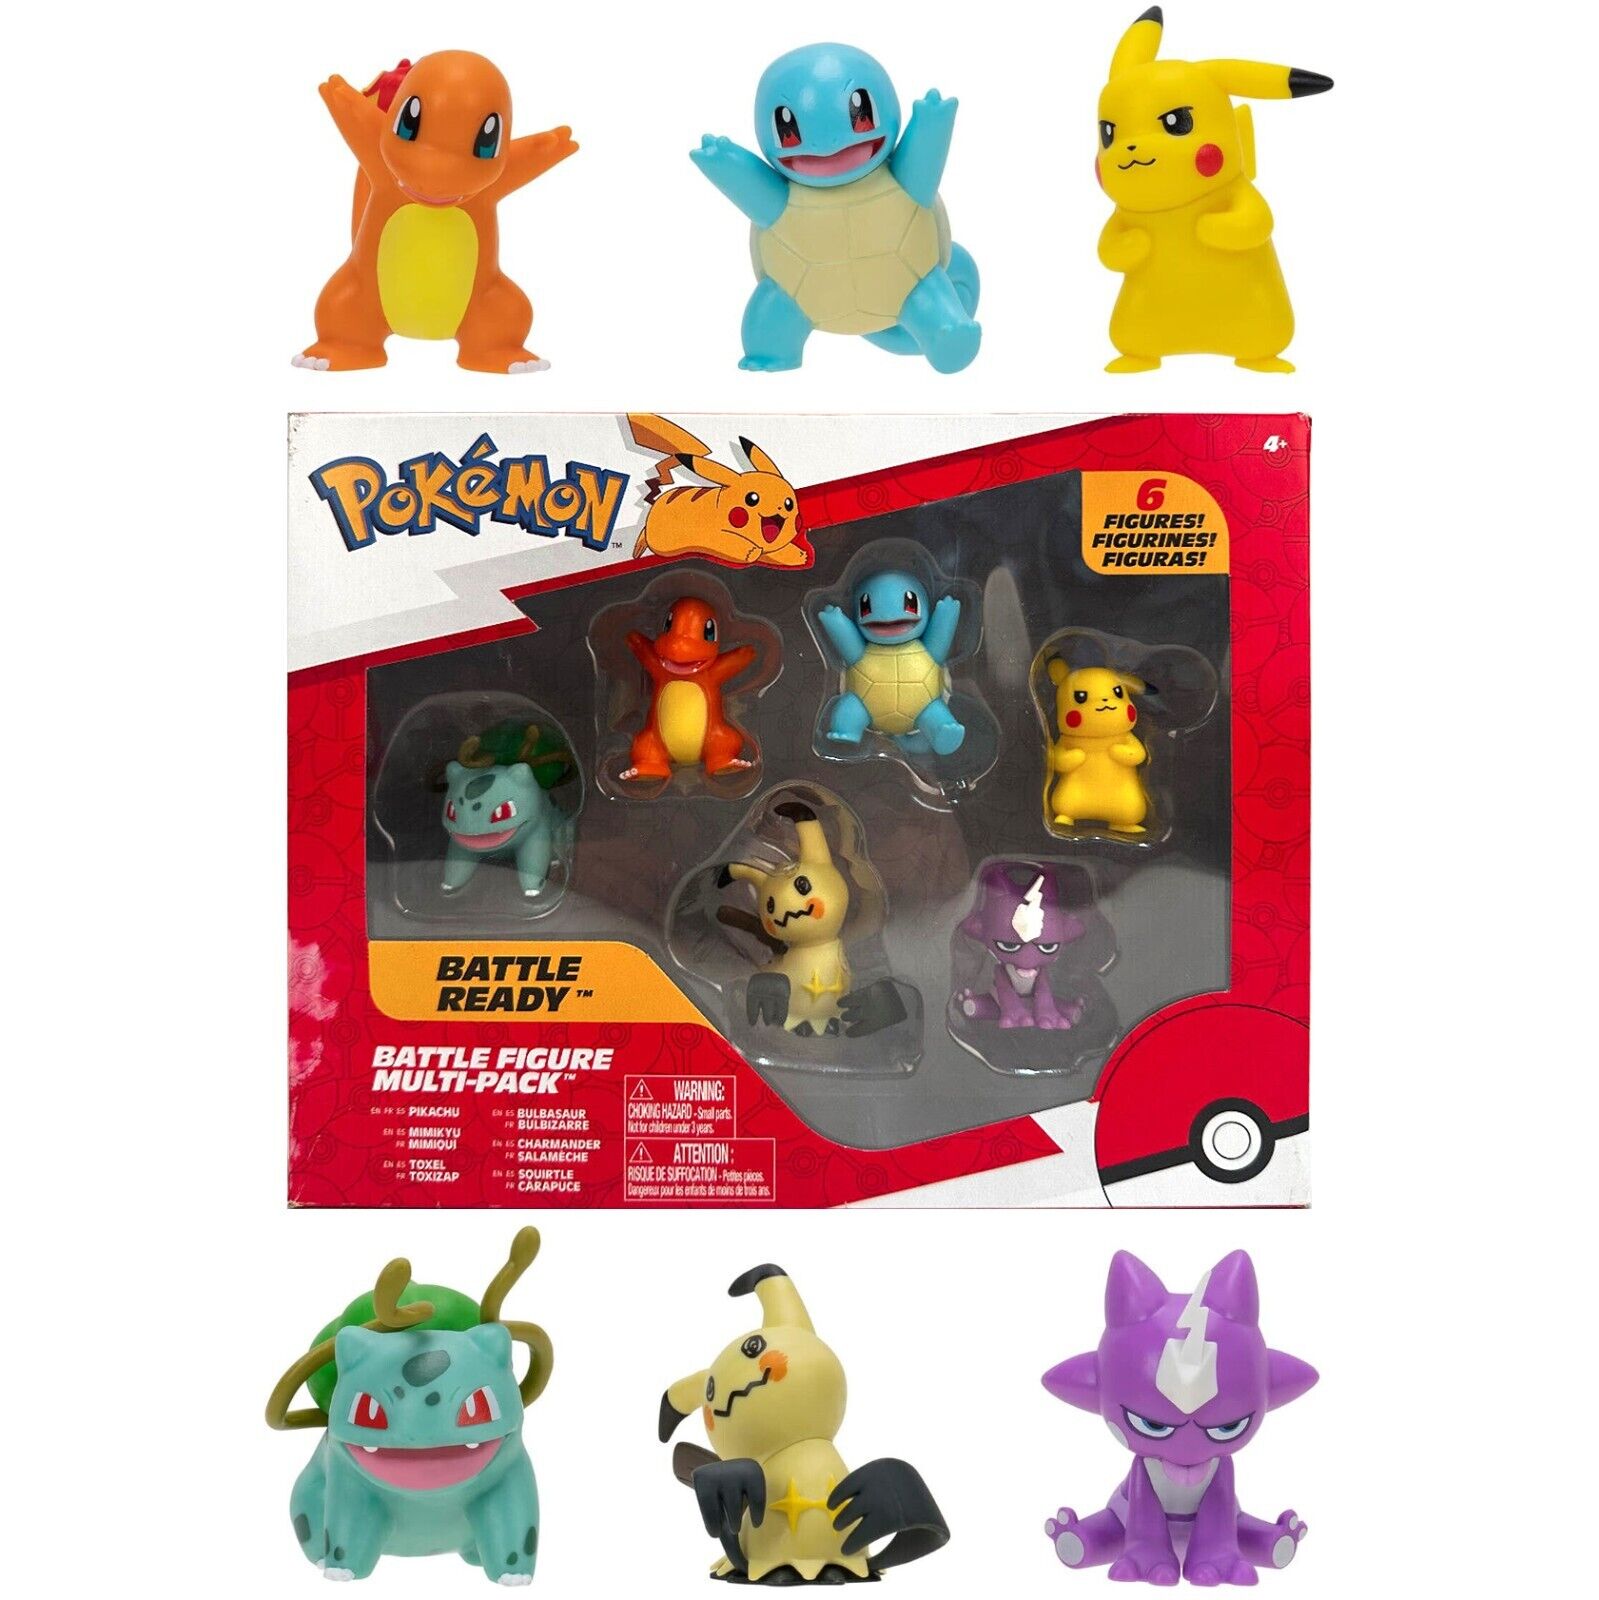 2-Inch Pokemon Battle Figure 6 Pcs Gift Set Toxel Bulbasaur Pikachu Statue Toy